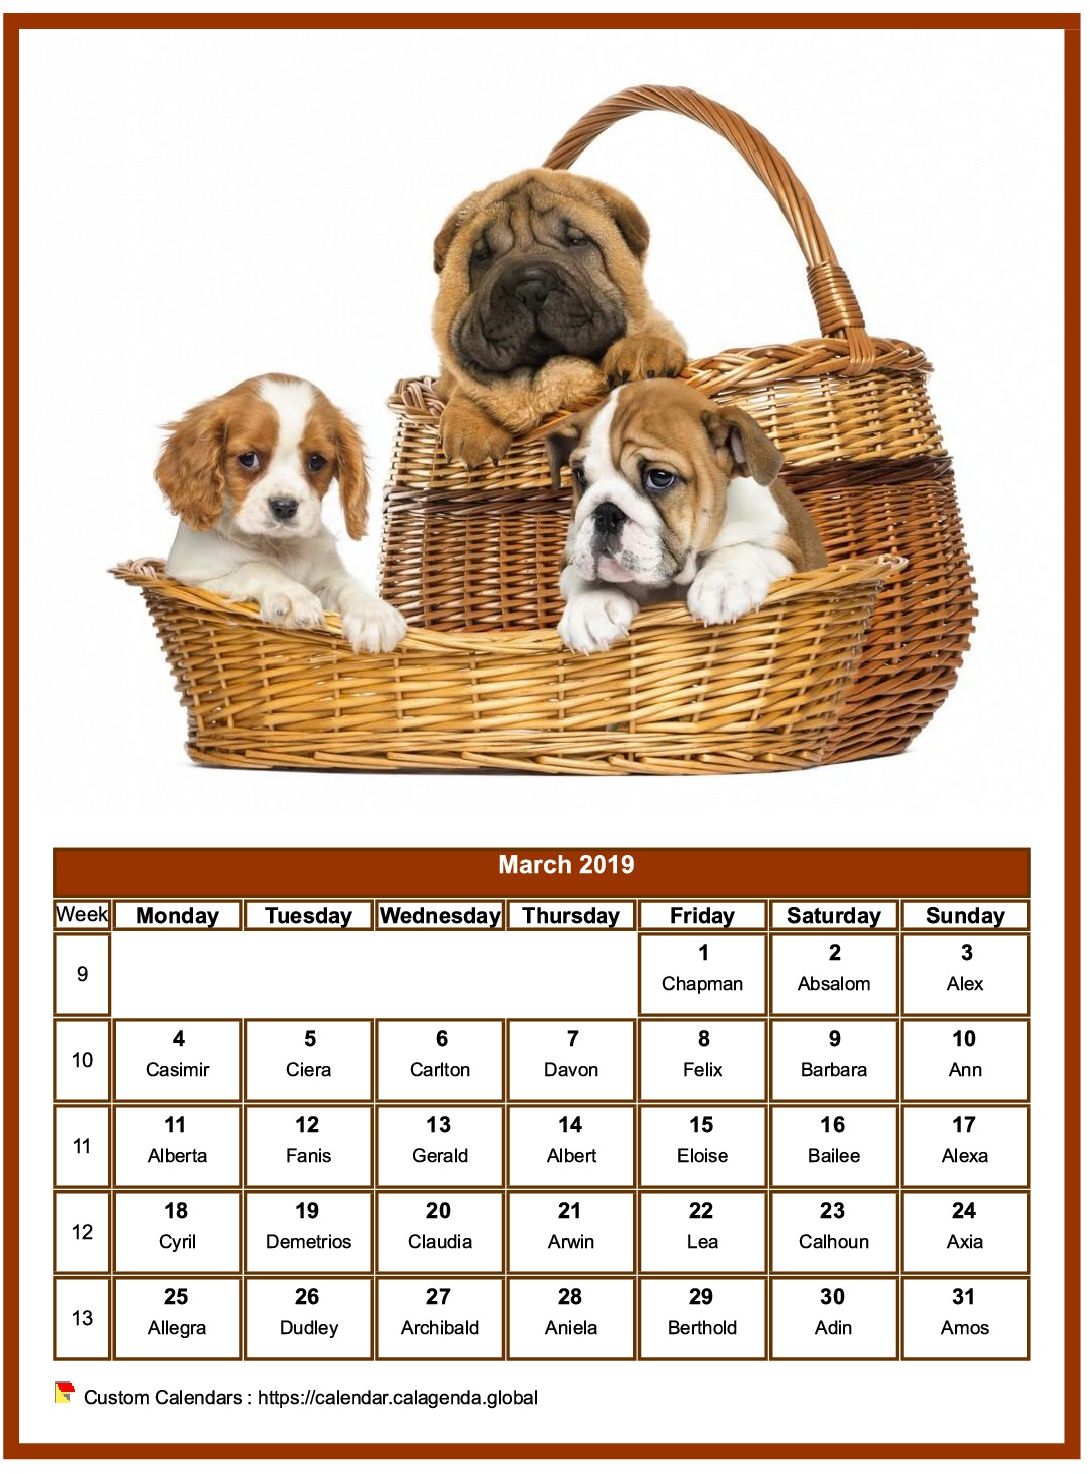 Calendar March 2019 dogs